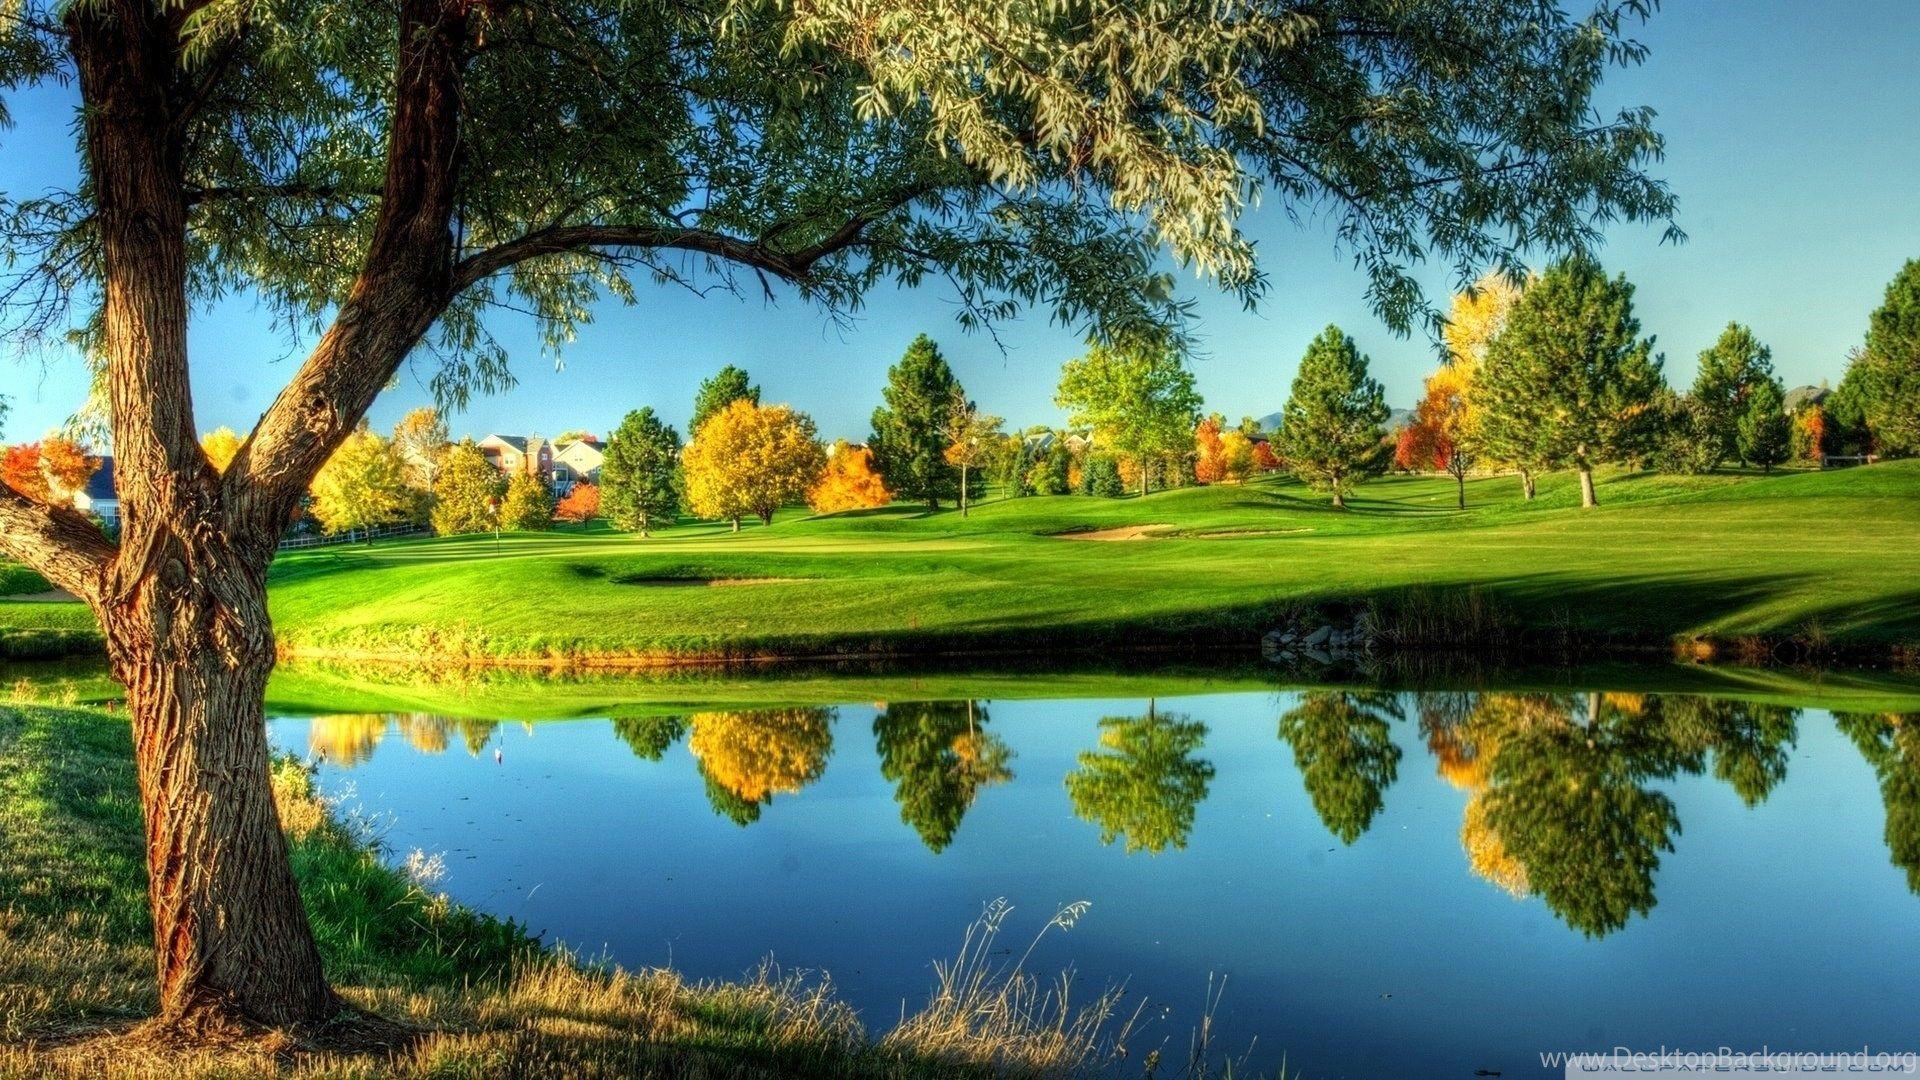 Golf Course Landscape HD Desktop Wallpaper, High Definition